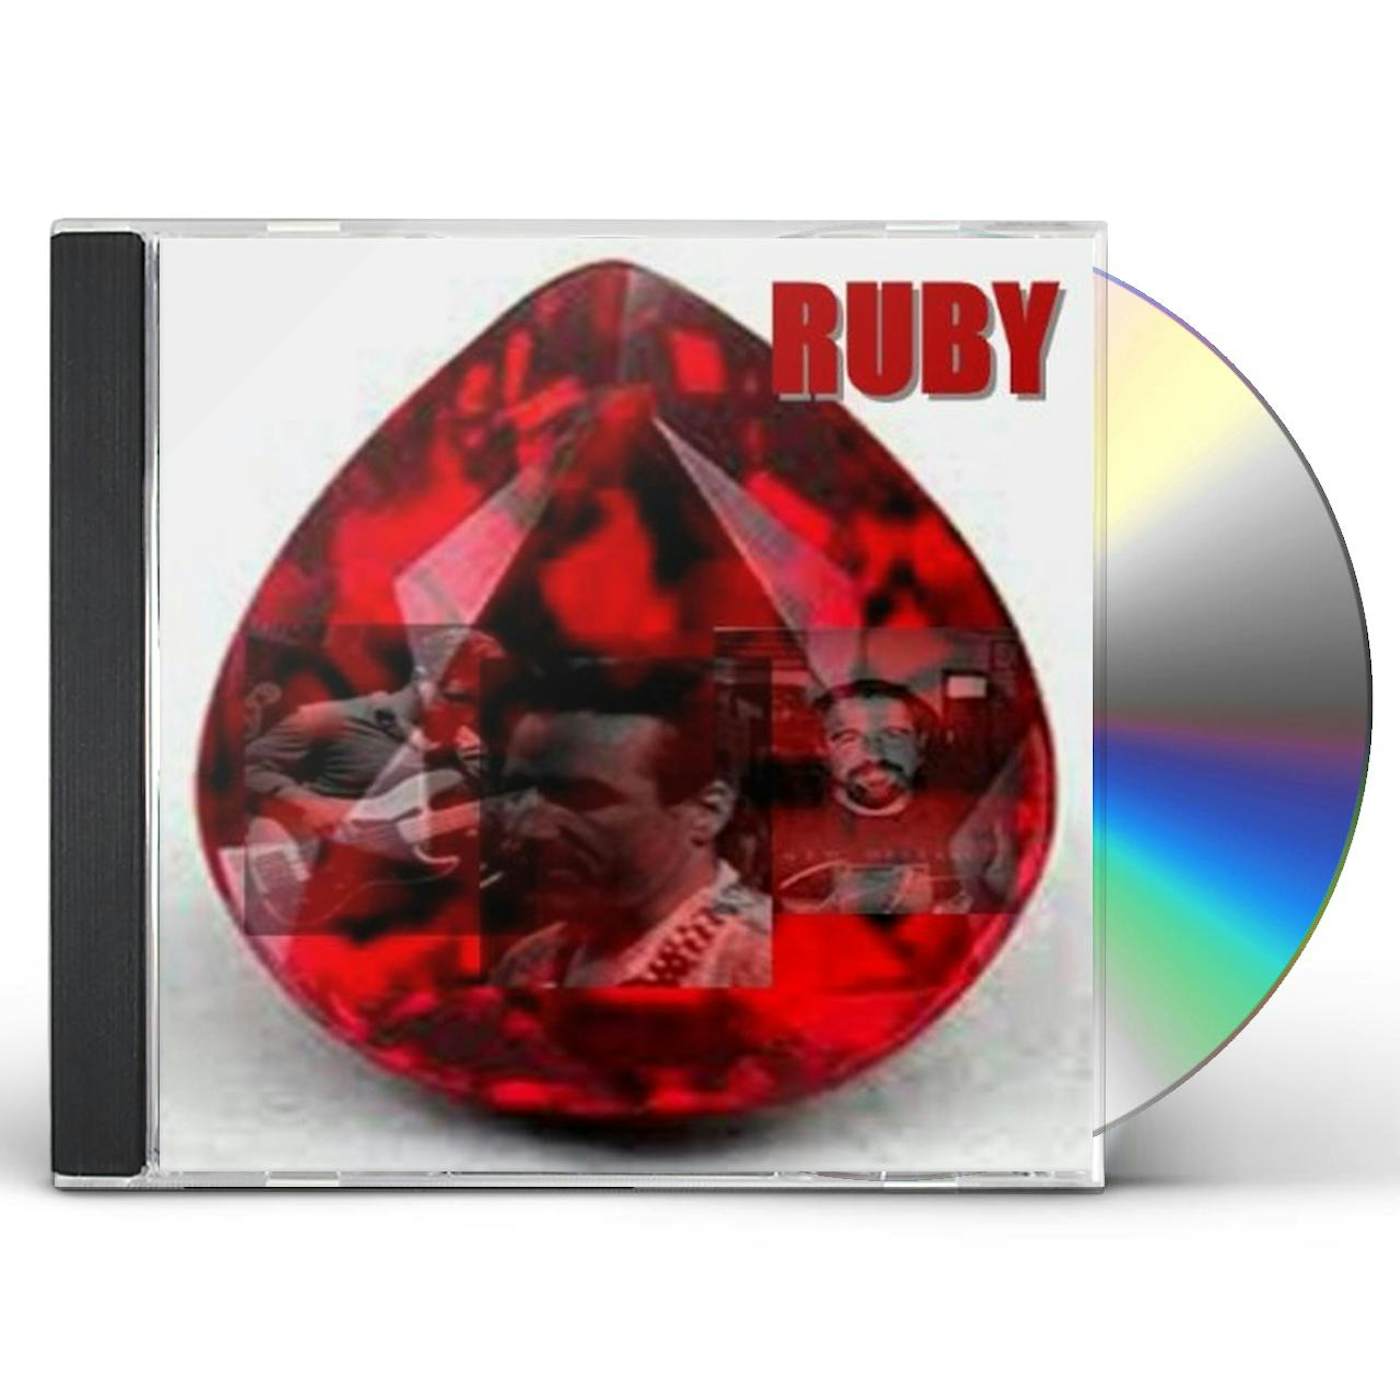 RUBY CD